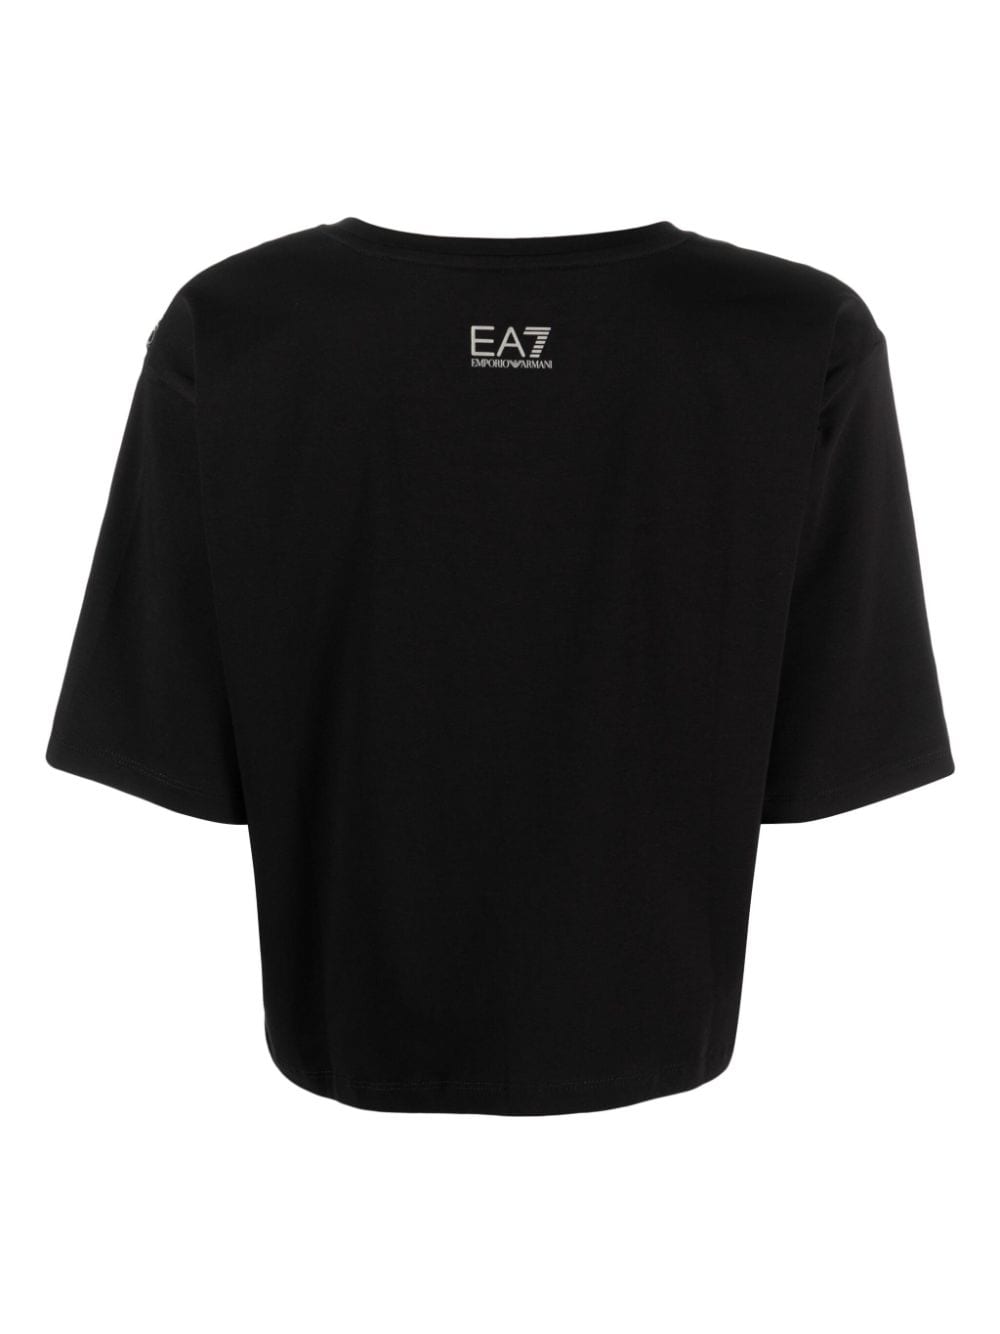 Image 2 of Ea7 Emporio Armani logo-print cropped T-shirt